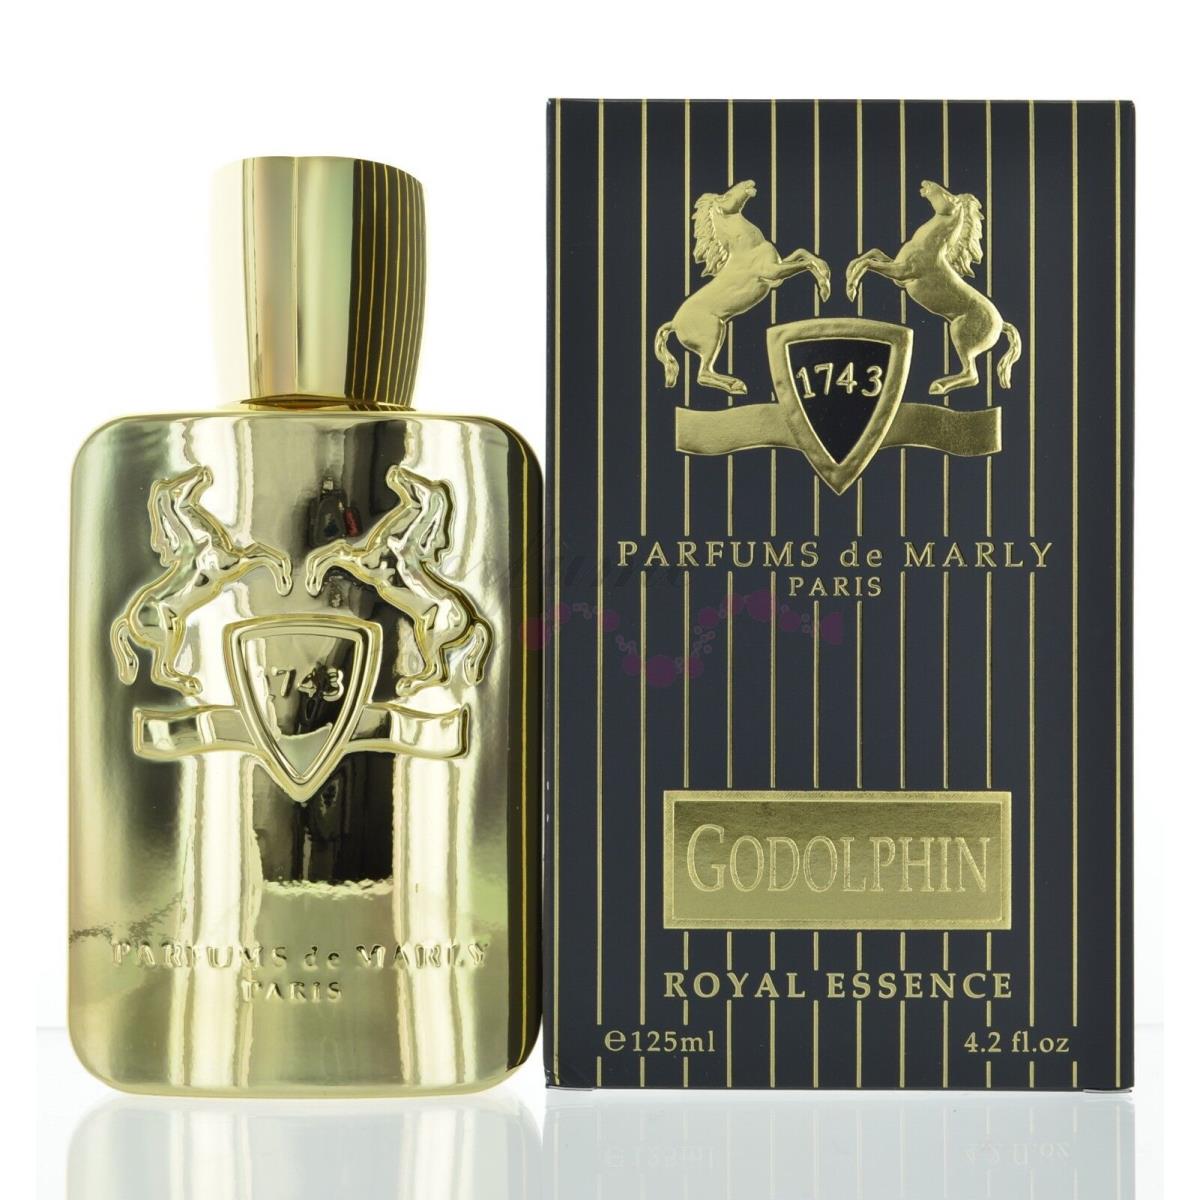 Godolphin by Parfums de Marly - 4.2 oz /125 ml Edp Spray